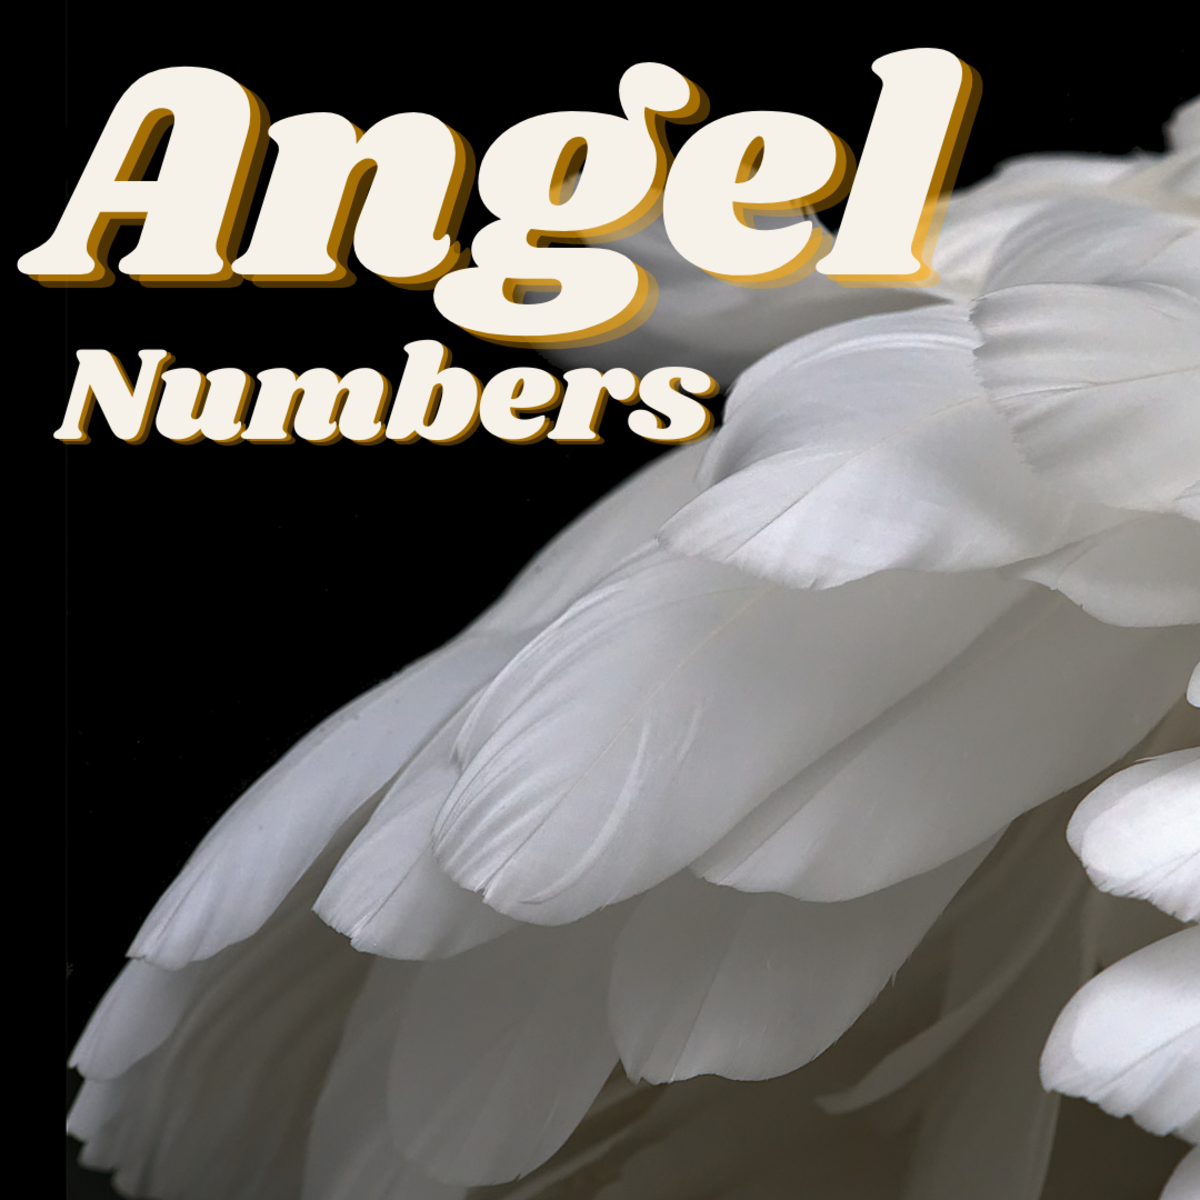 Angel Numbers Explained